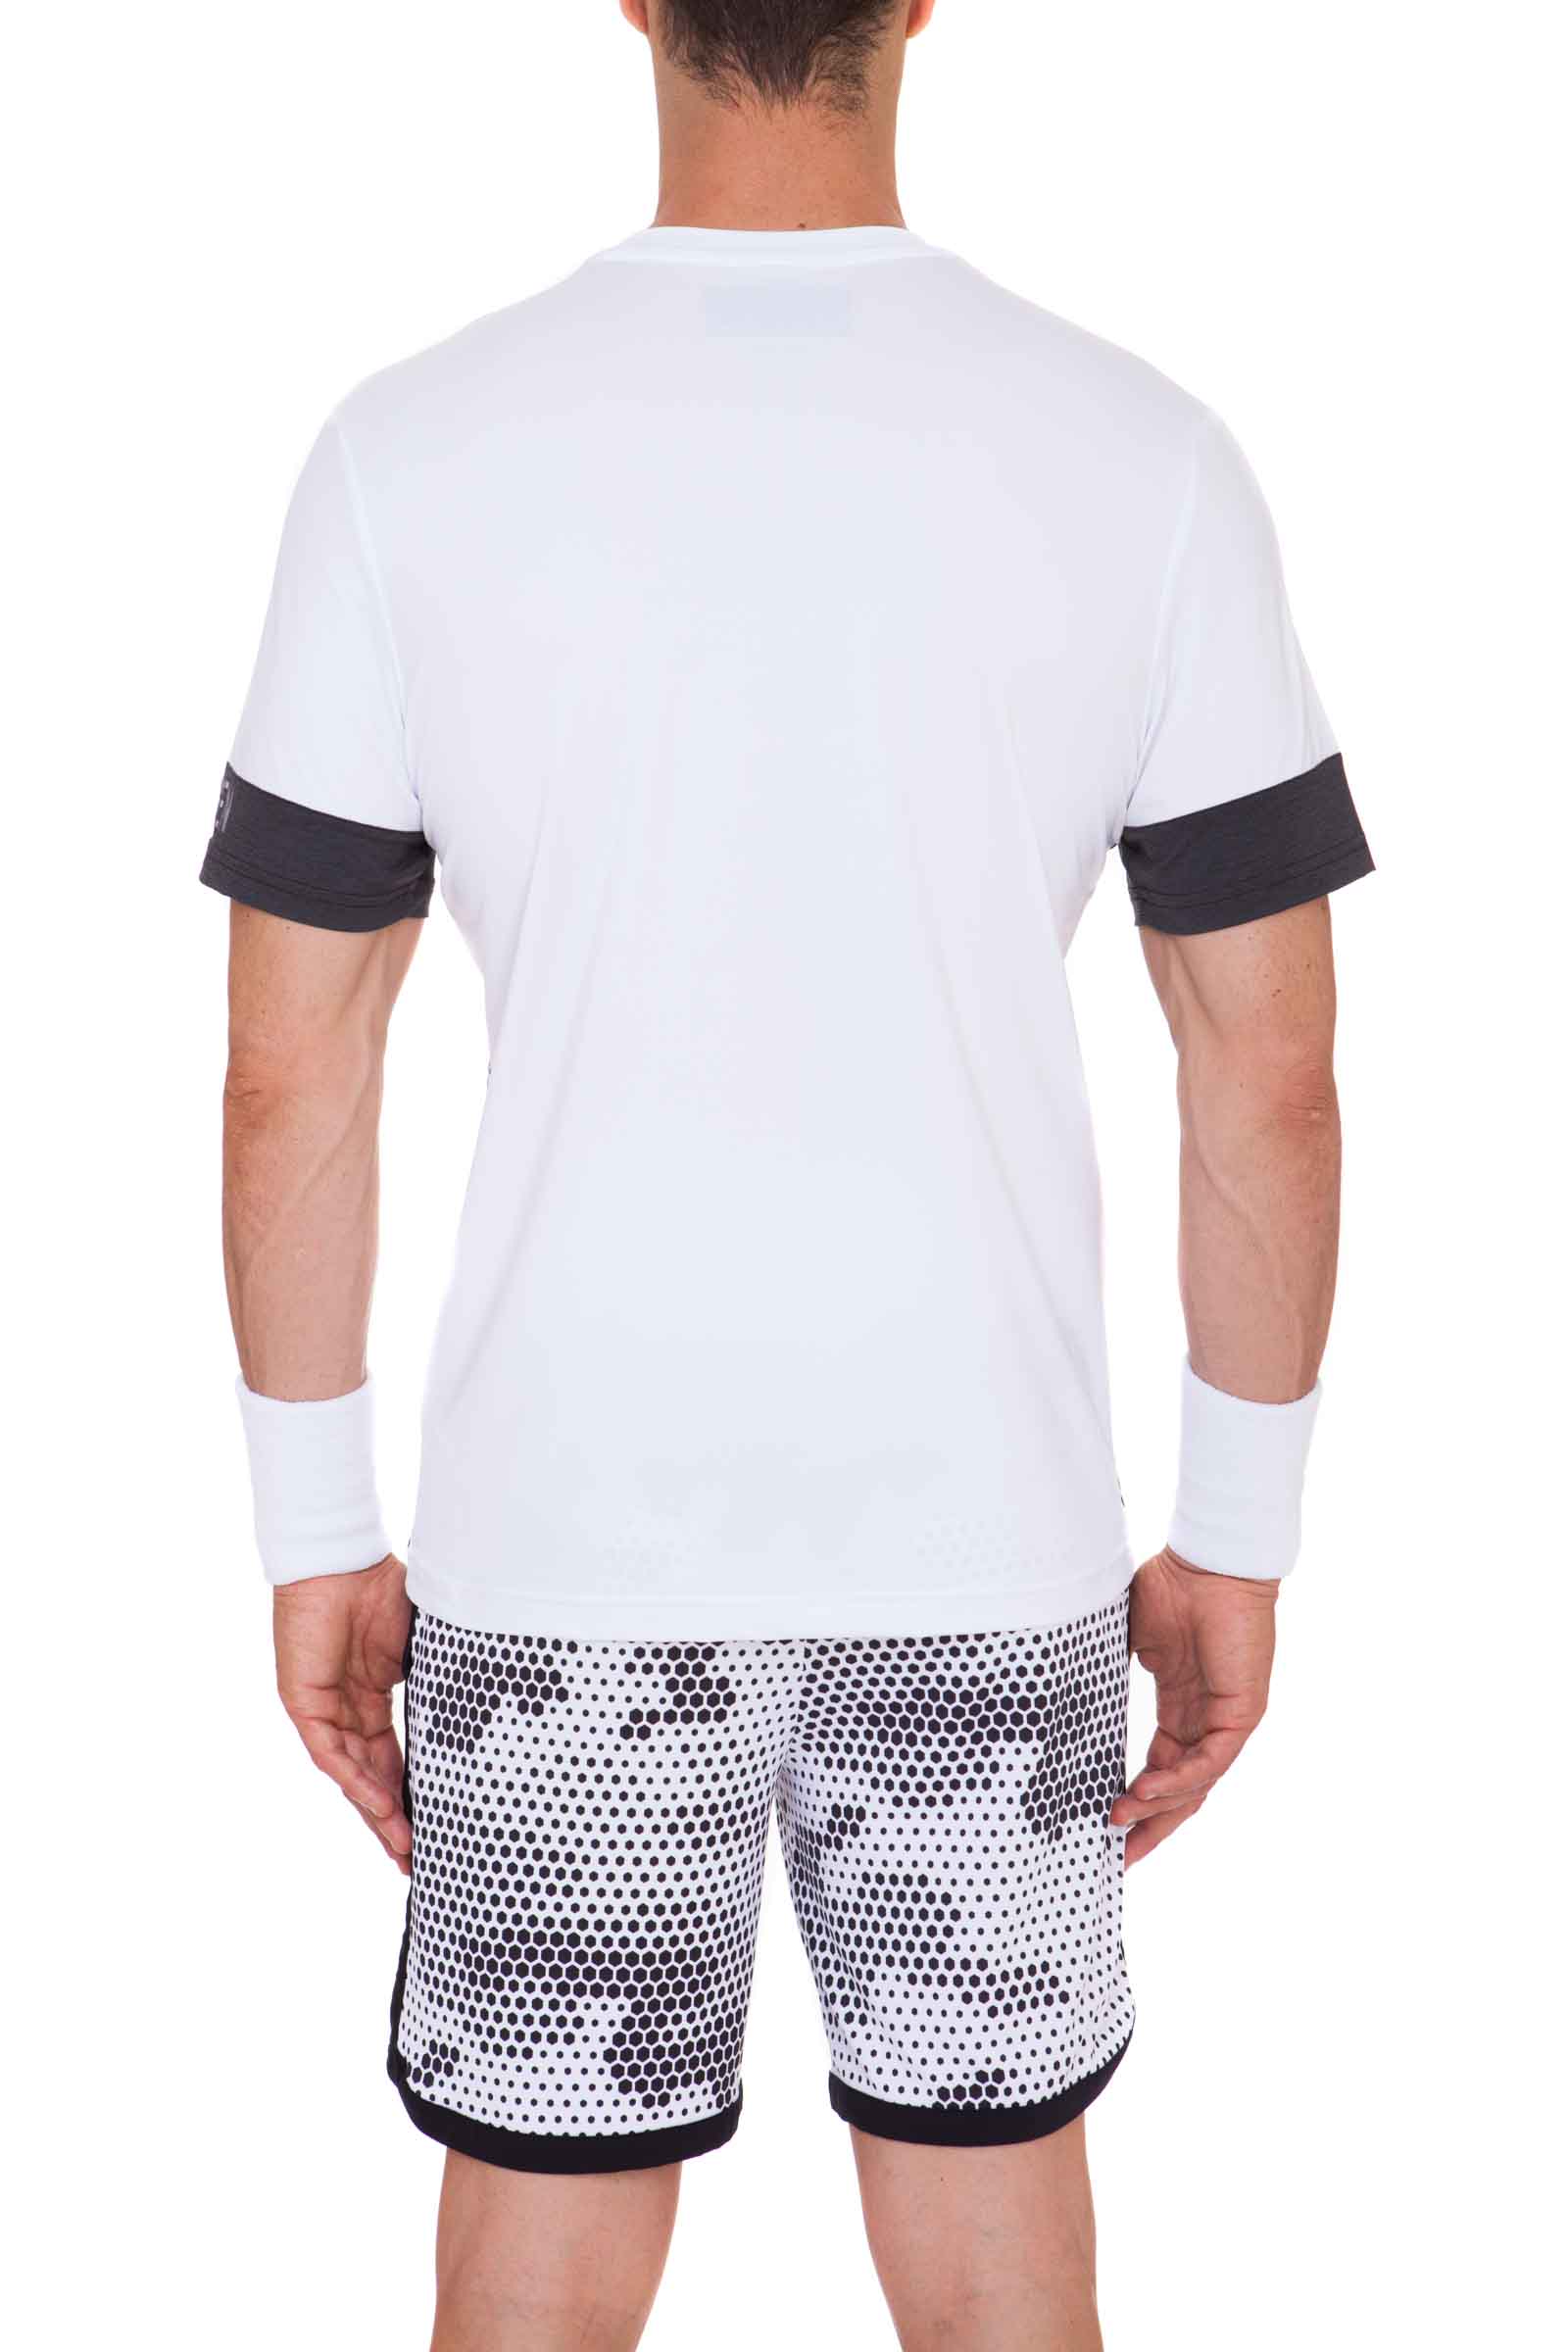 Tech Camo T-Shirt - Hydrogen Tennis Clothing